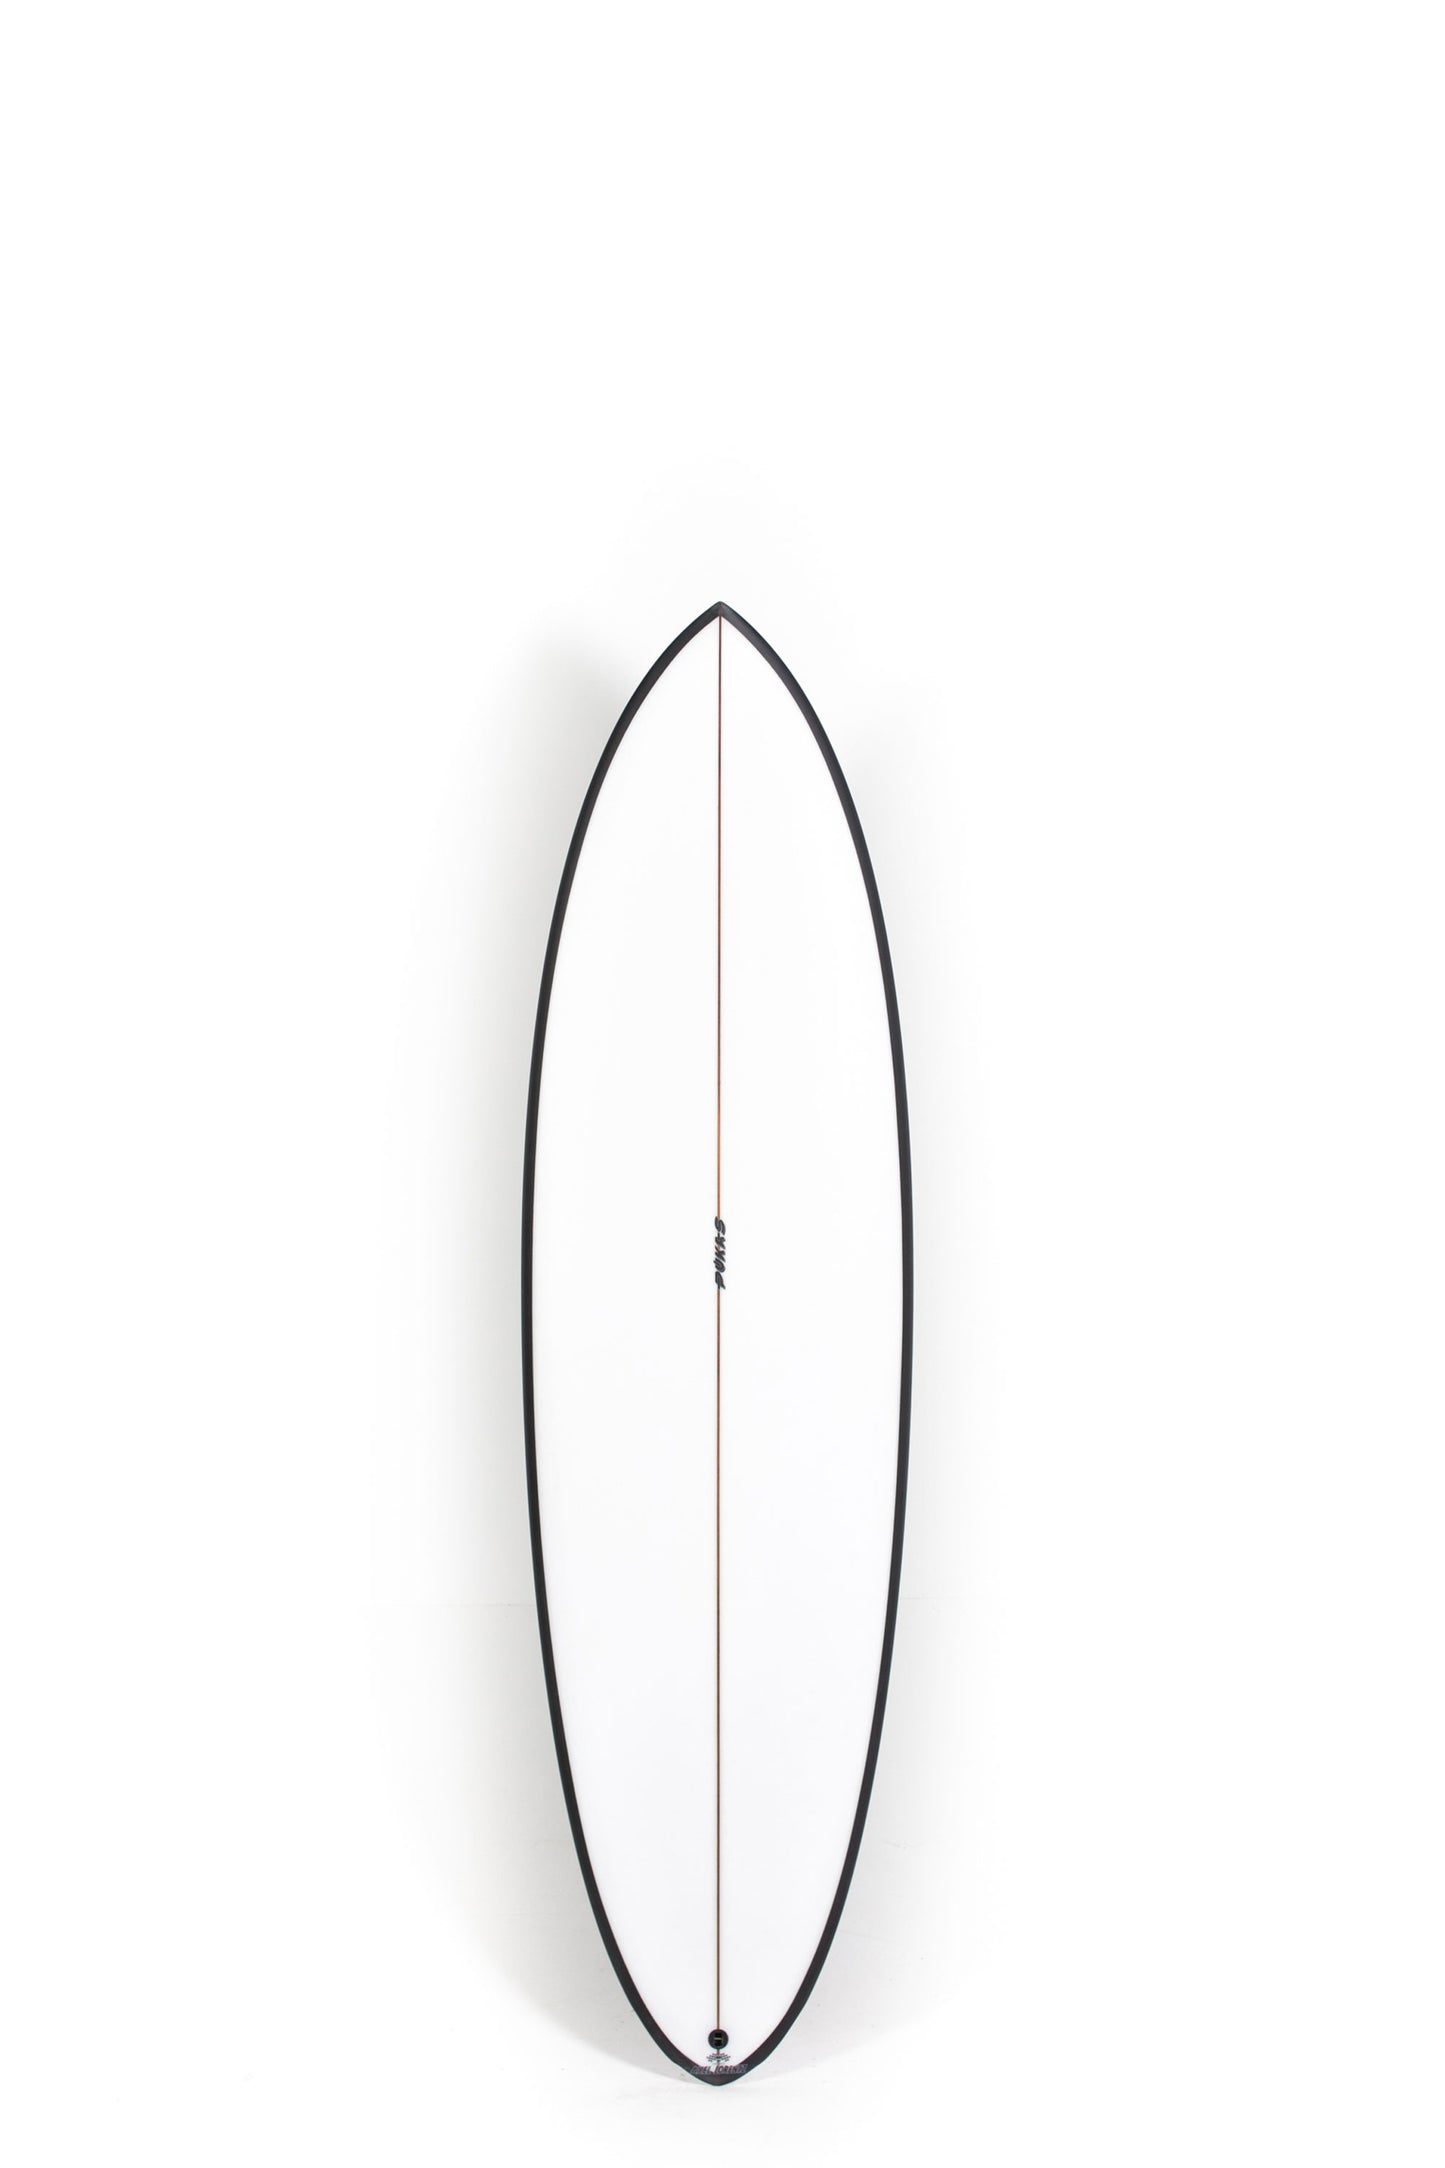 Pukas Surf Shop - Pukas Surfboard - LADY TWIN by Axel Lorentz - 6’6” x 20,88 x 2,85 - 40,57L - AX09840